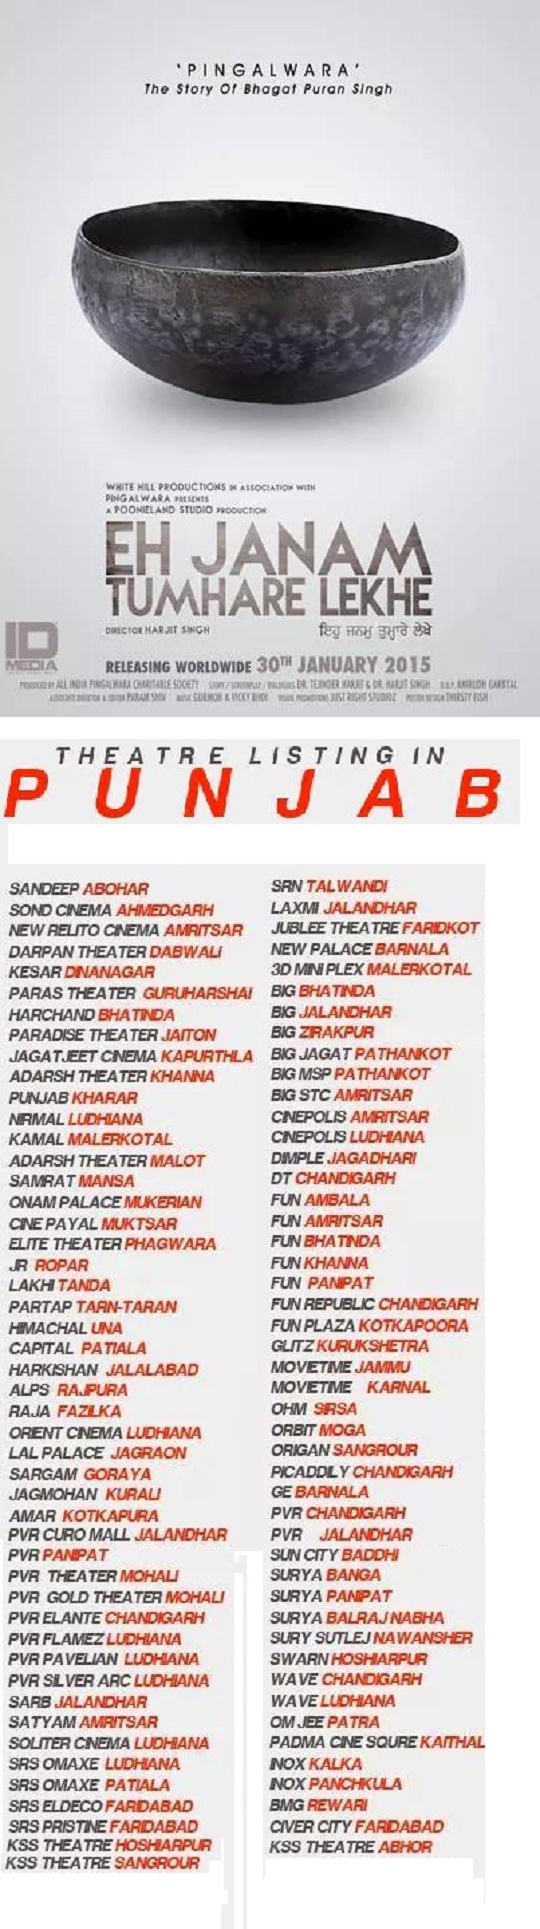 Eh Janam Tumhare Lekhe - Cinema Listings in Punjab and adjoining states